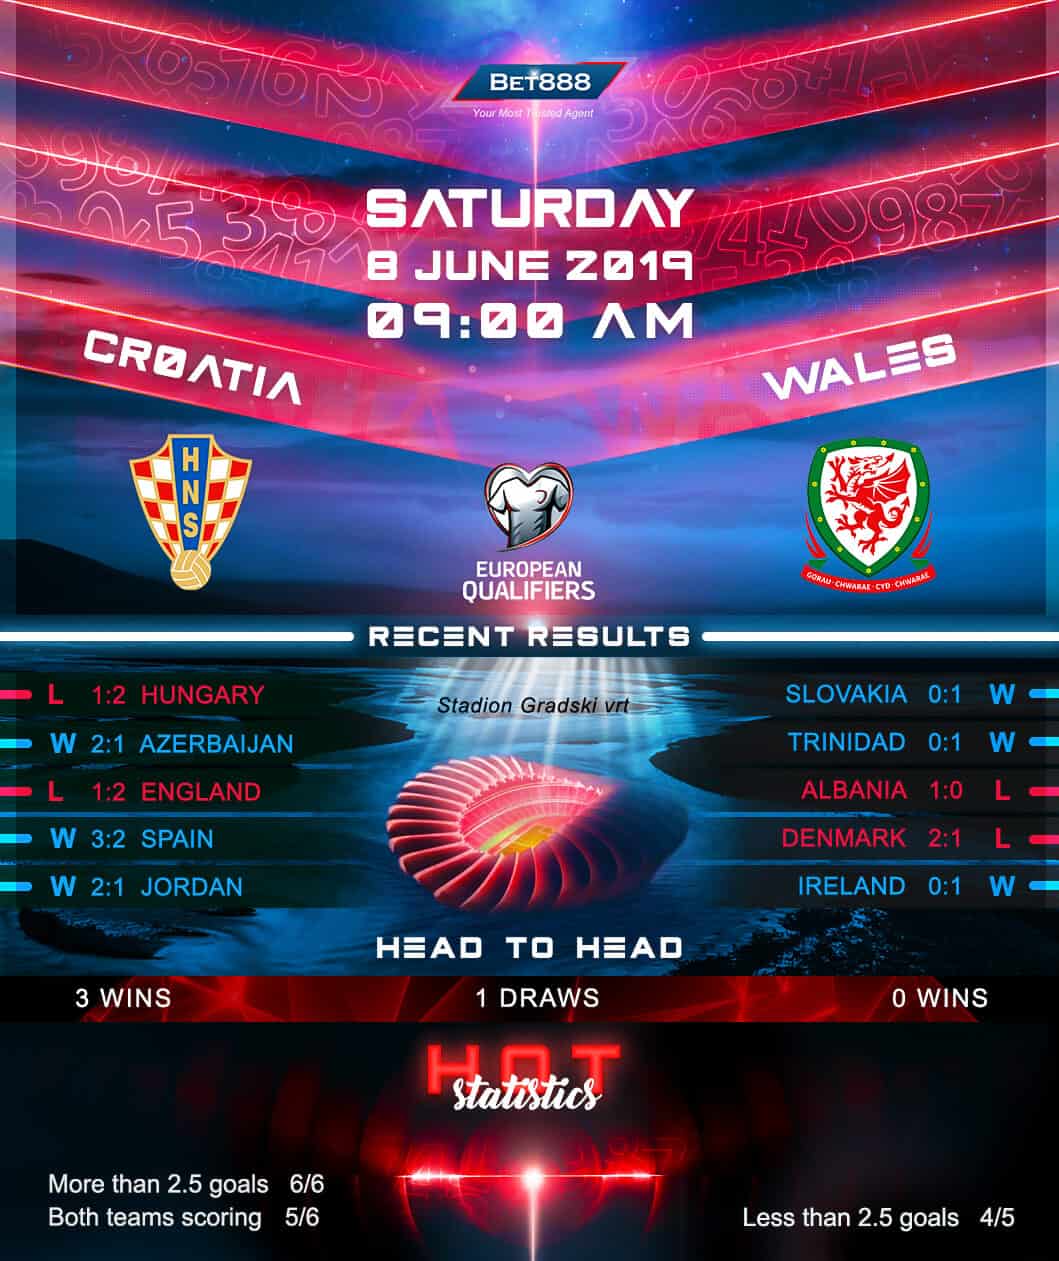 Croatia vs Wales 08/06/19